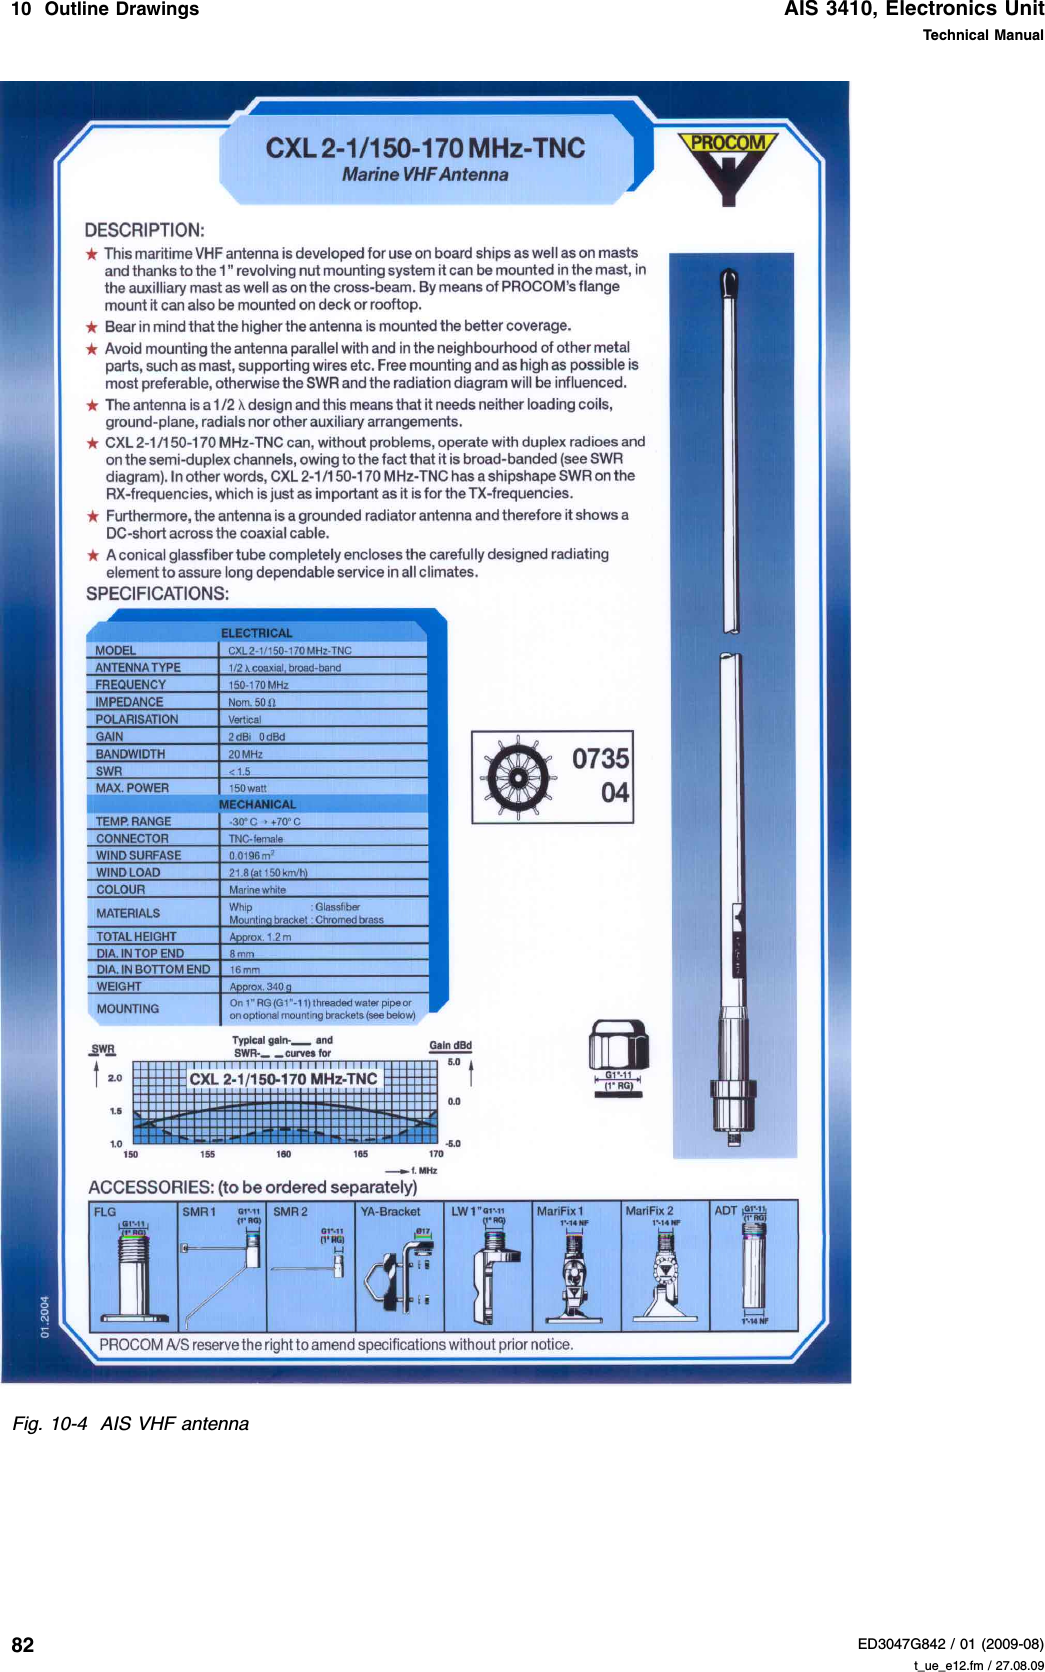 AIS 3410, Electronics UnitED3047G842 / 01 (2009-08)Technical Manual10  Outline Drawings   t_ue_e12.fm / 27.08.0982Fig. 10-4 AIS VHF antenna